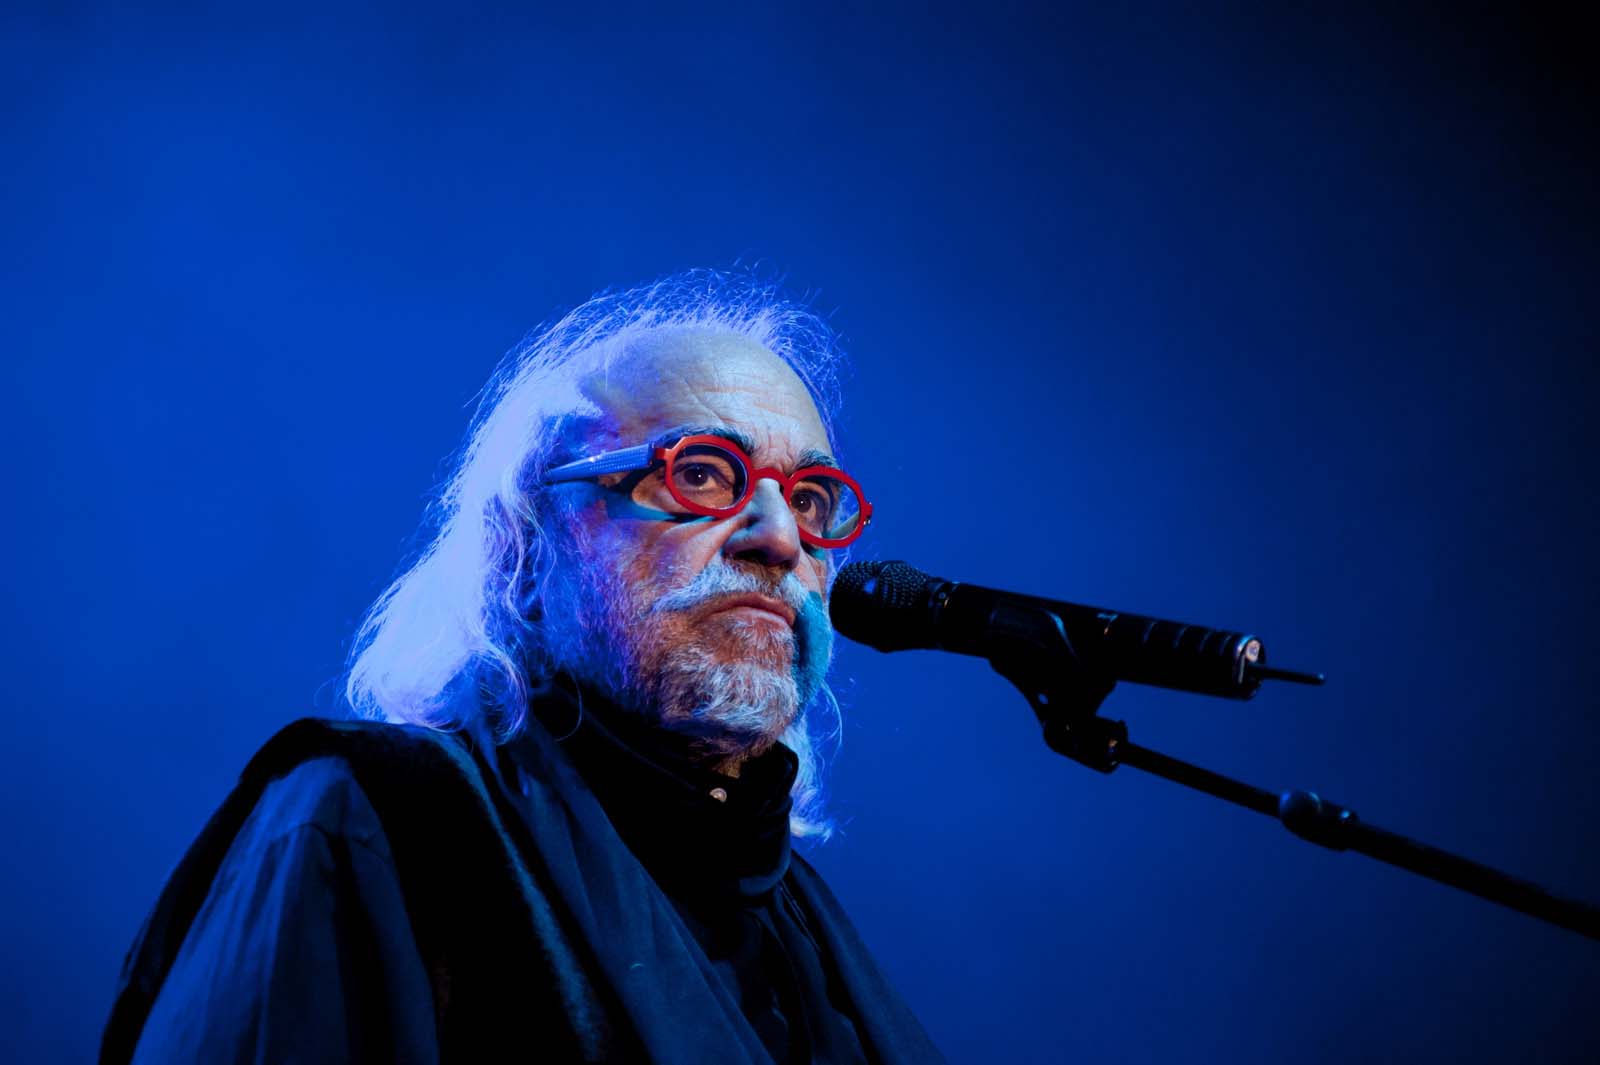 Concert demis Roussos , 20 decembrie 2011, credit Foto Alin Craciun